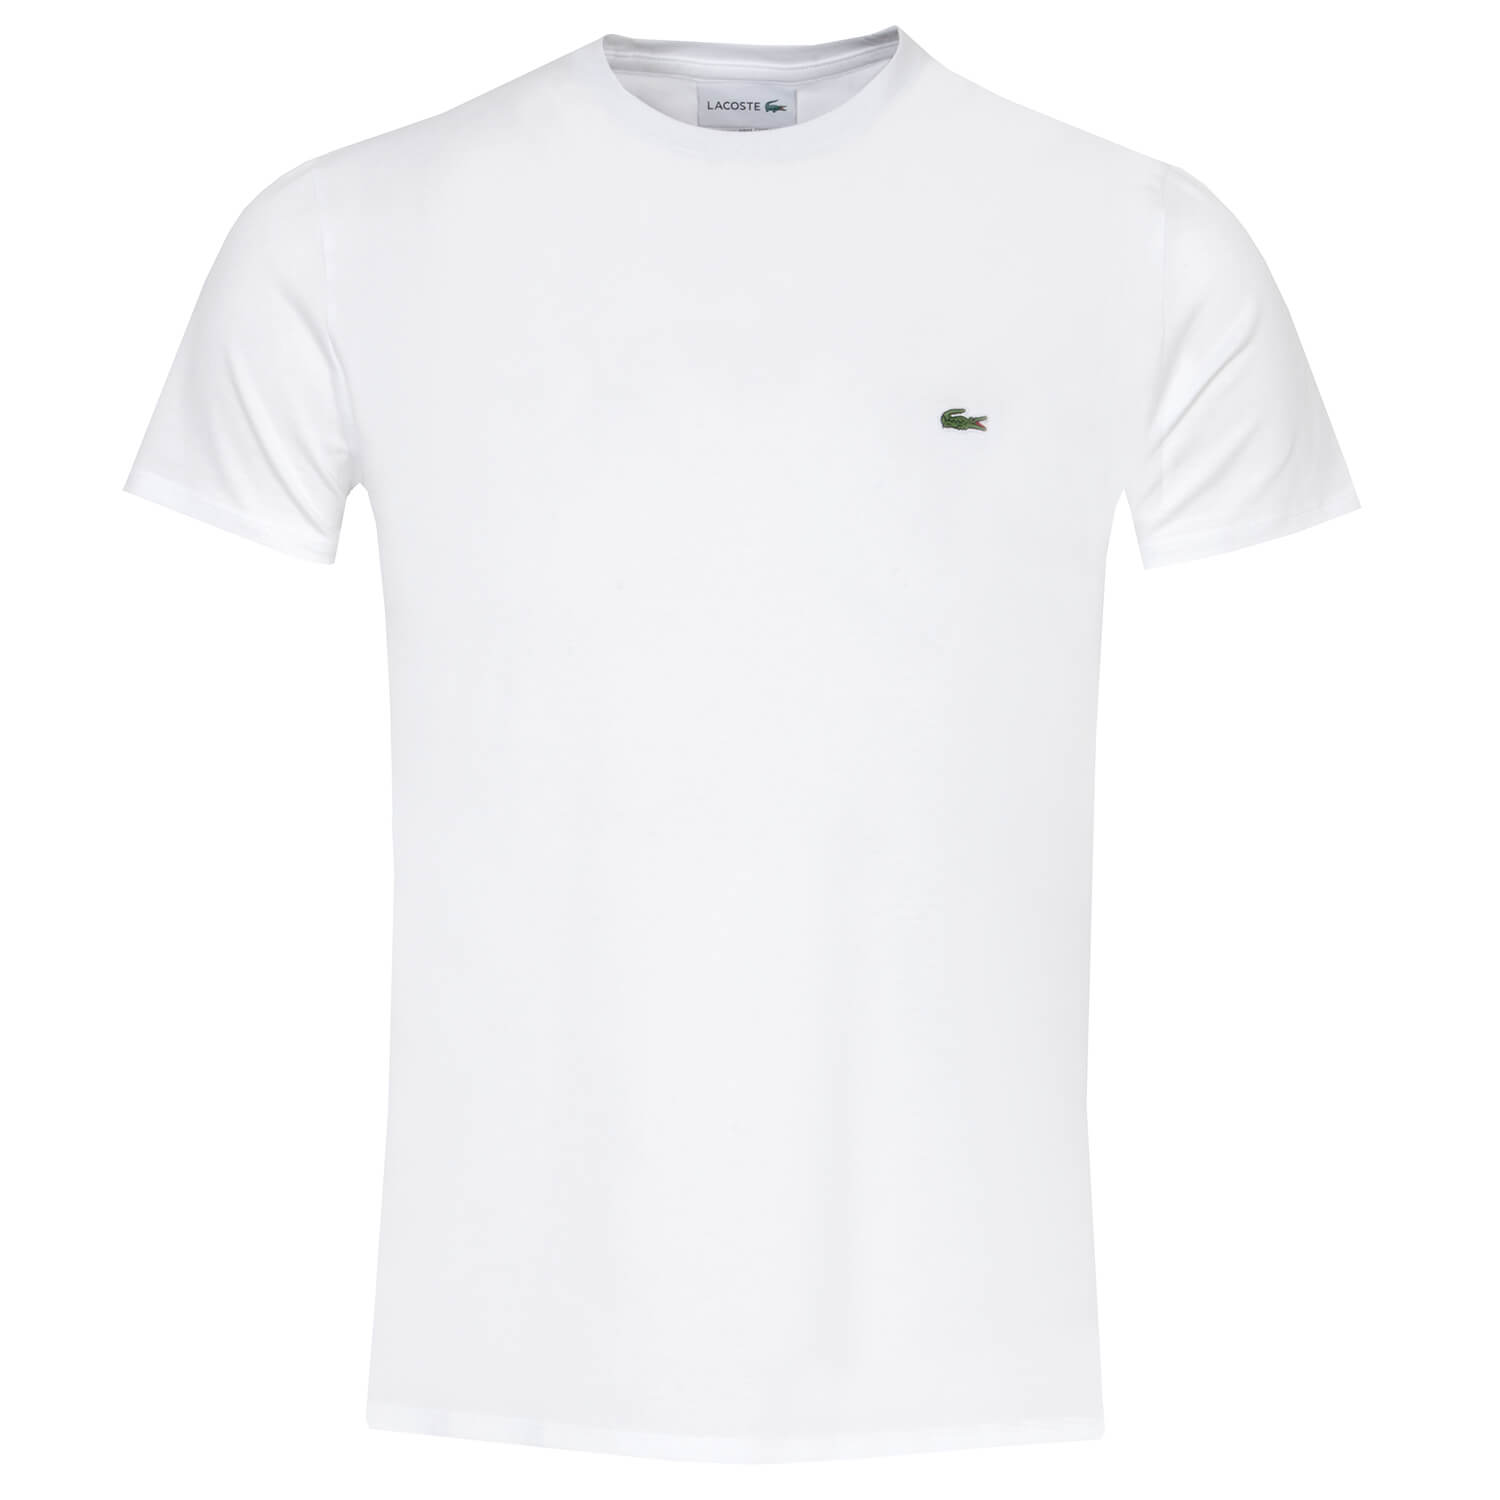 Lacoste Classic Tee Shirt White | Scottsdale Golf